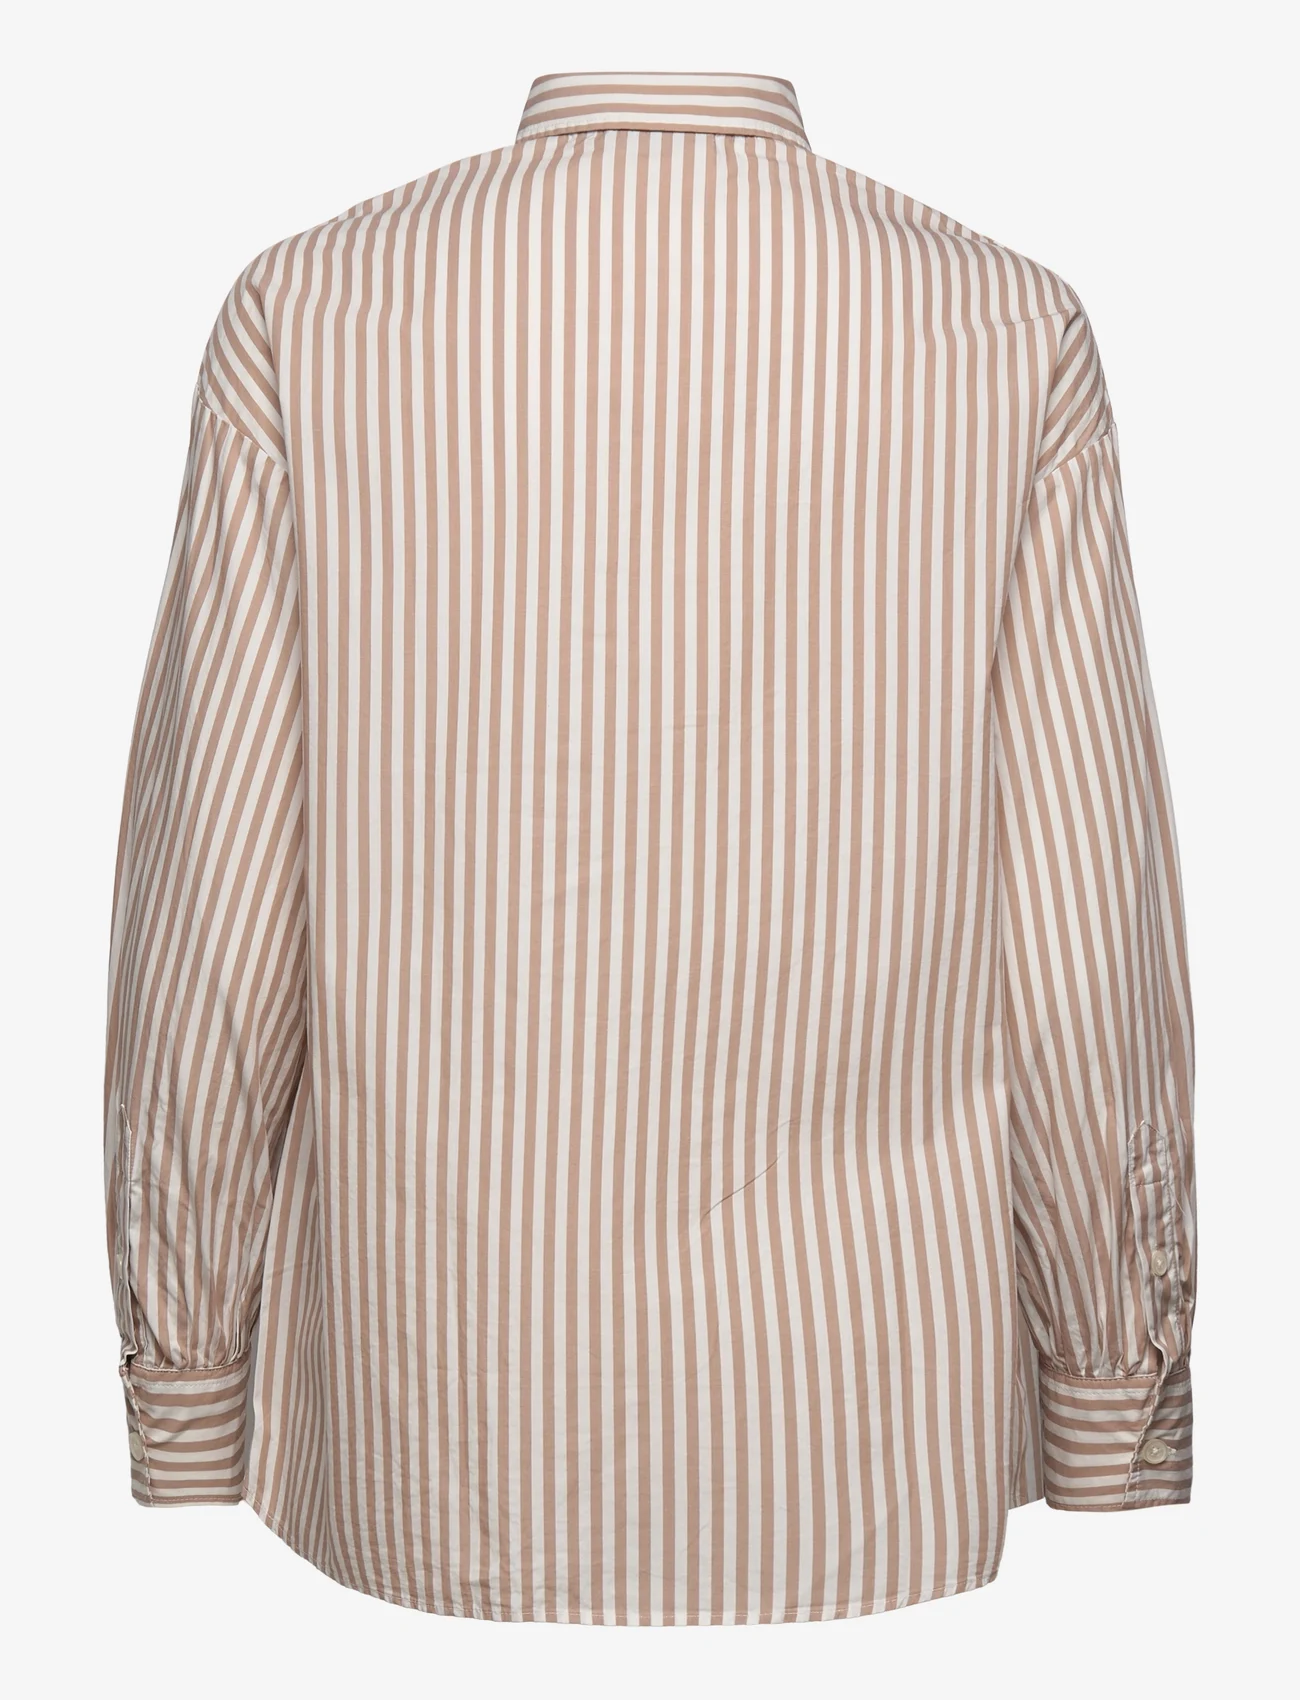 Lexington Clothing - Daphne Organic Cotton Poplin Shirt - beige/white stripe - 1